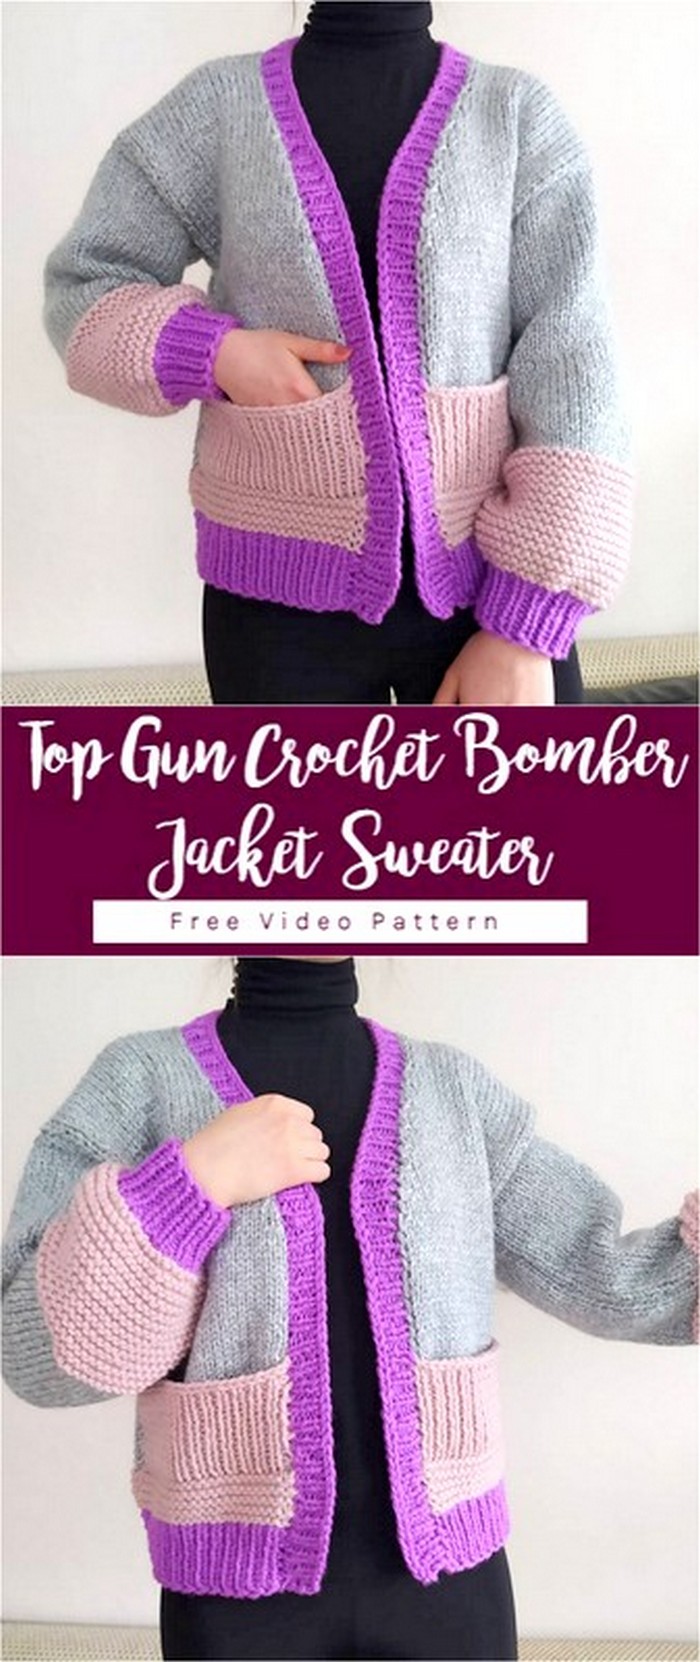 Top Gun Crochet Bomber Jacket Sweater